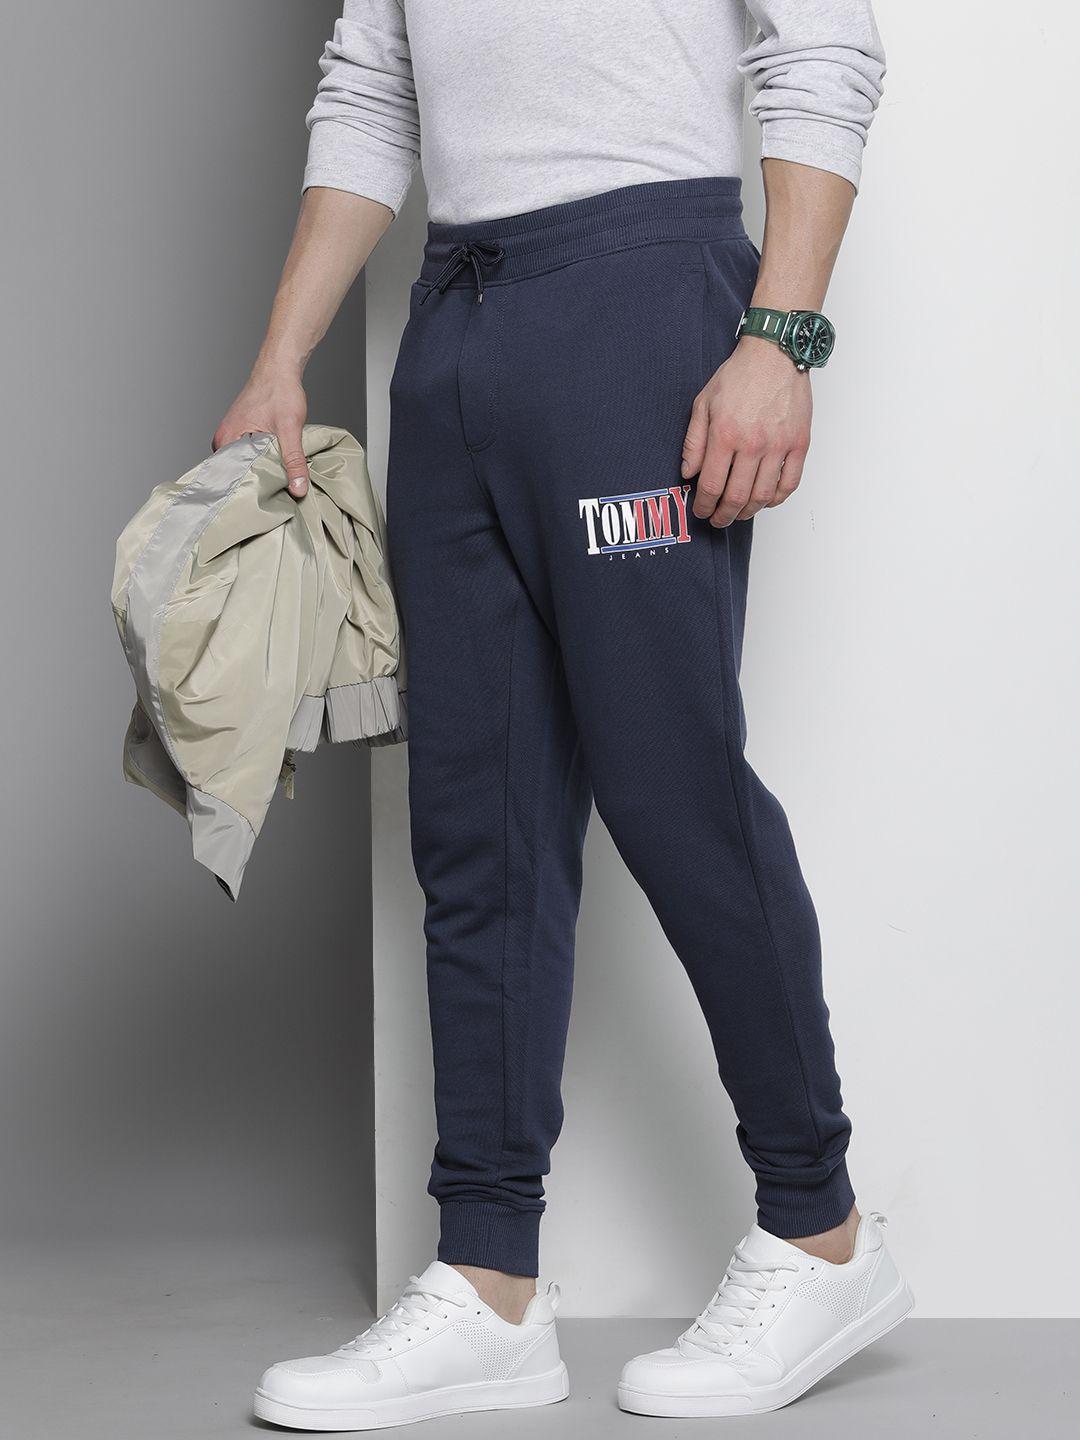 tommy-hilfiger-men-navy-blue-slim-fit-joggers-trousers